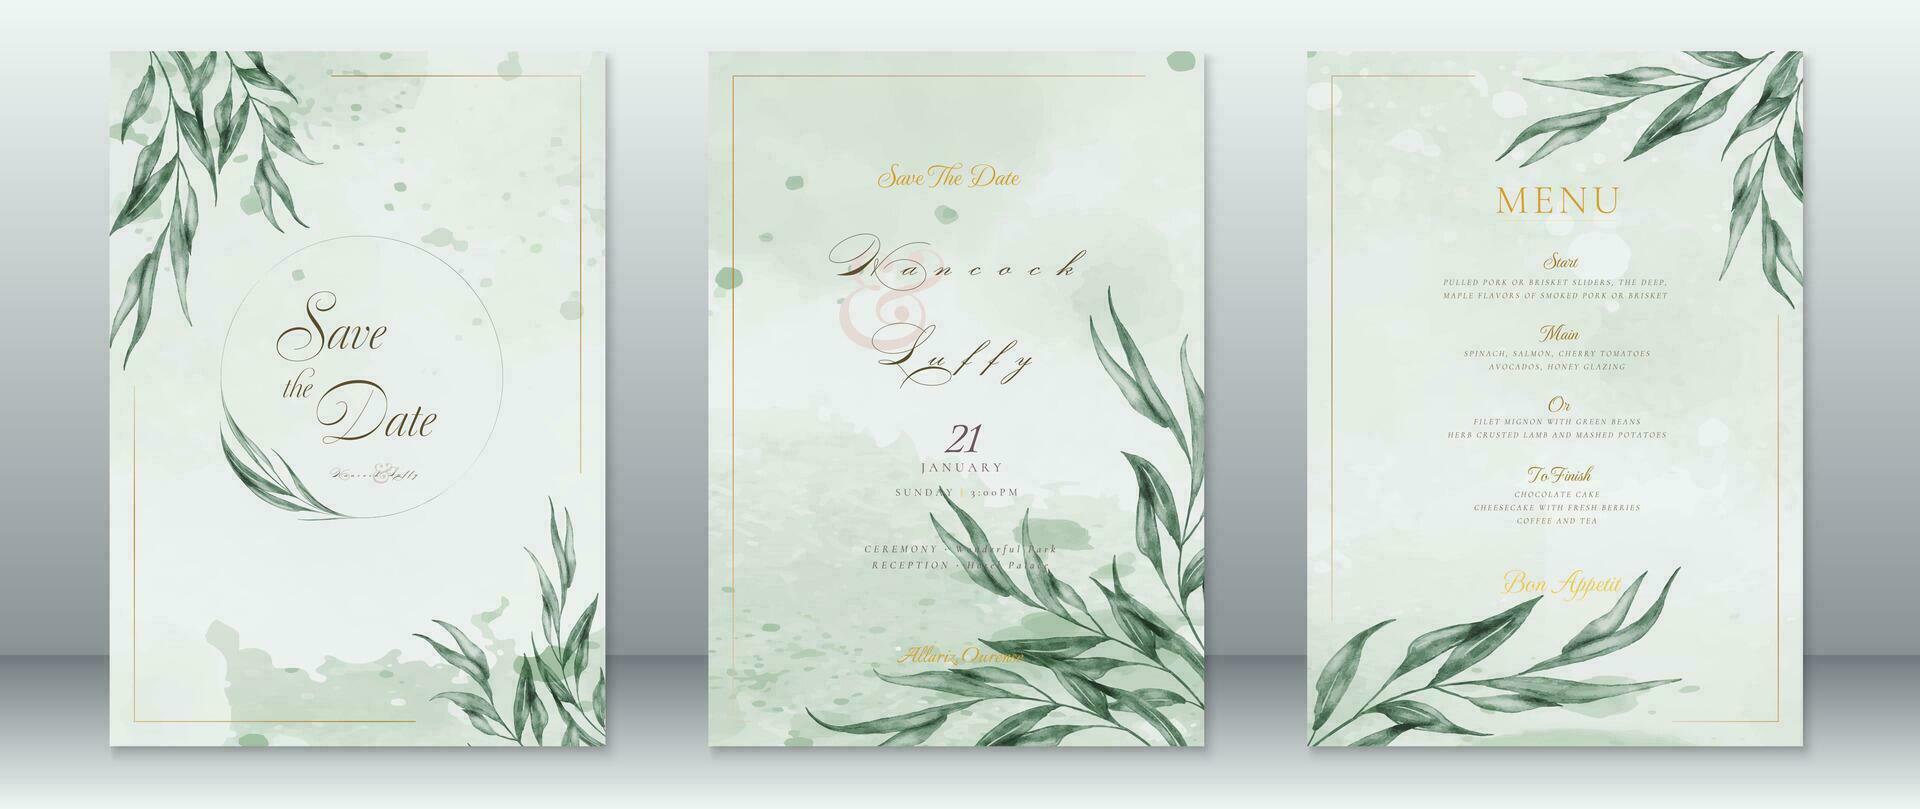 Wedding invitation card template green nature design vector